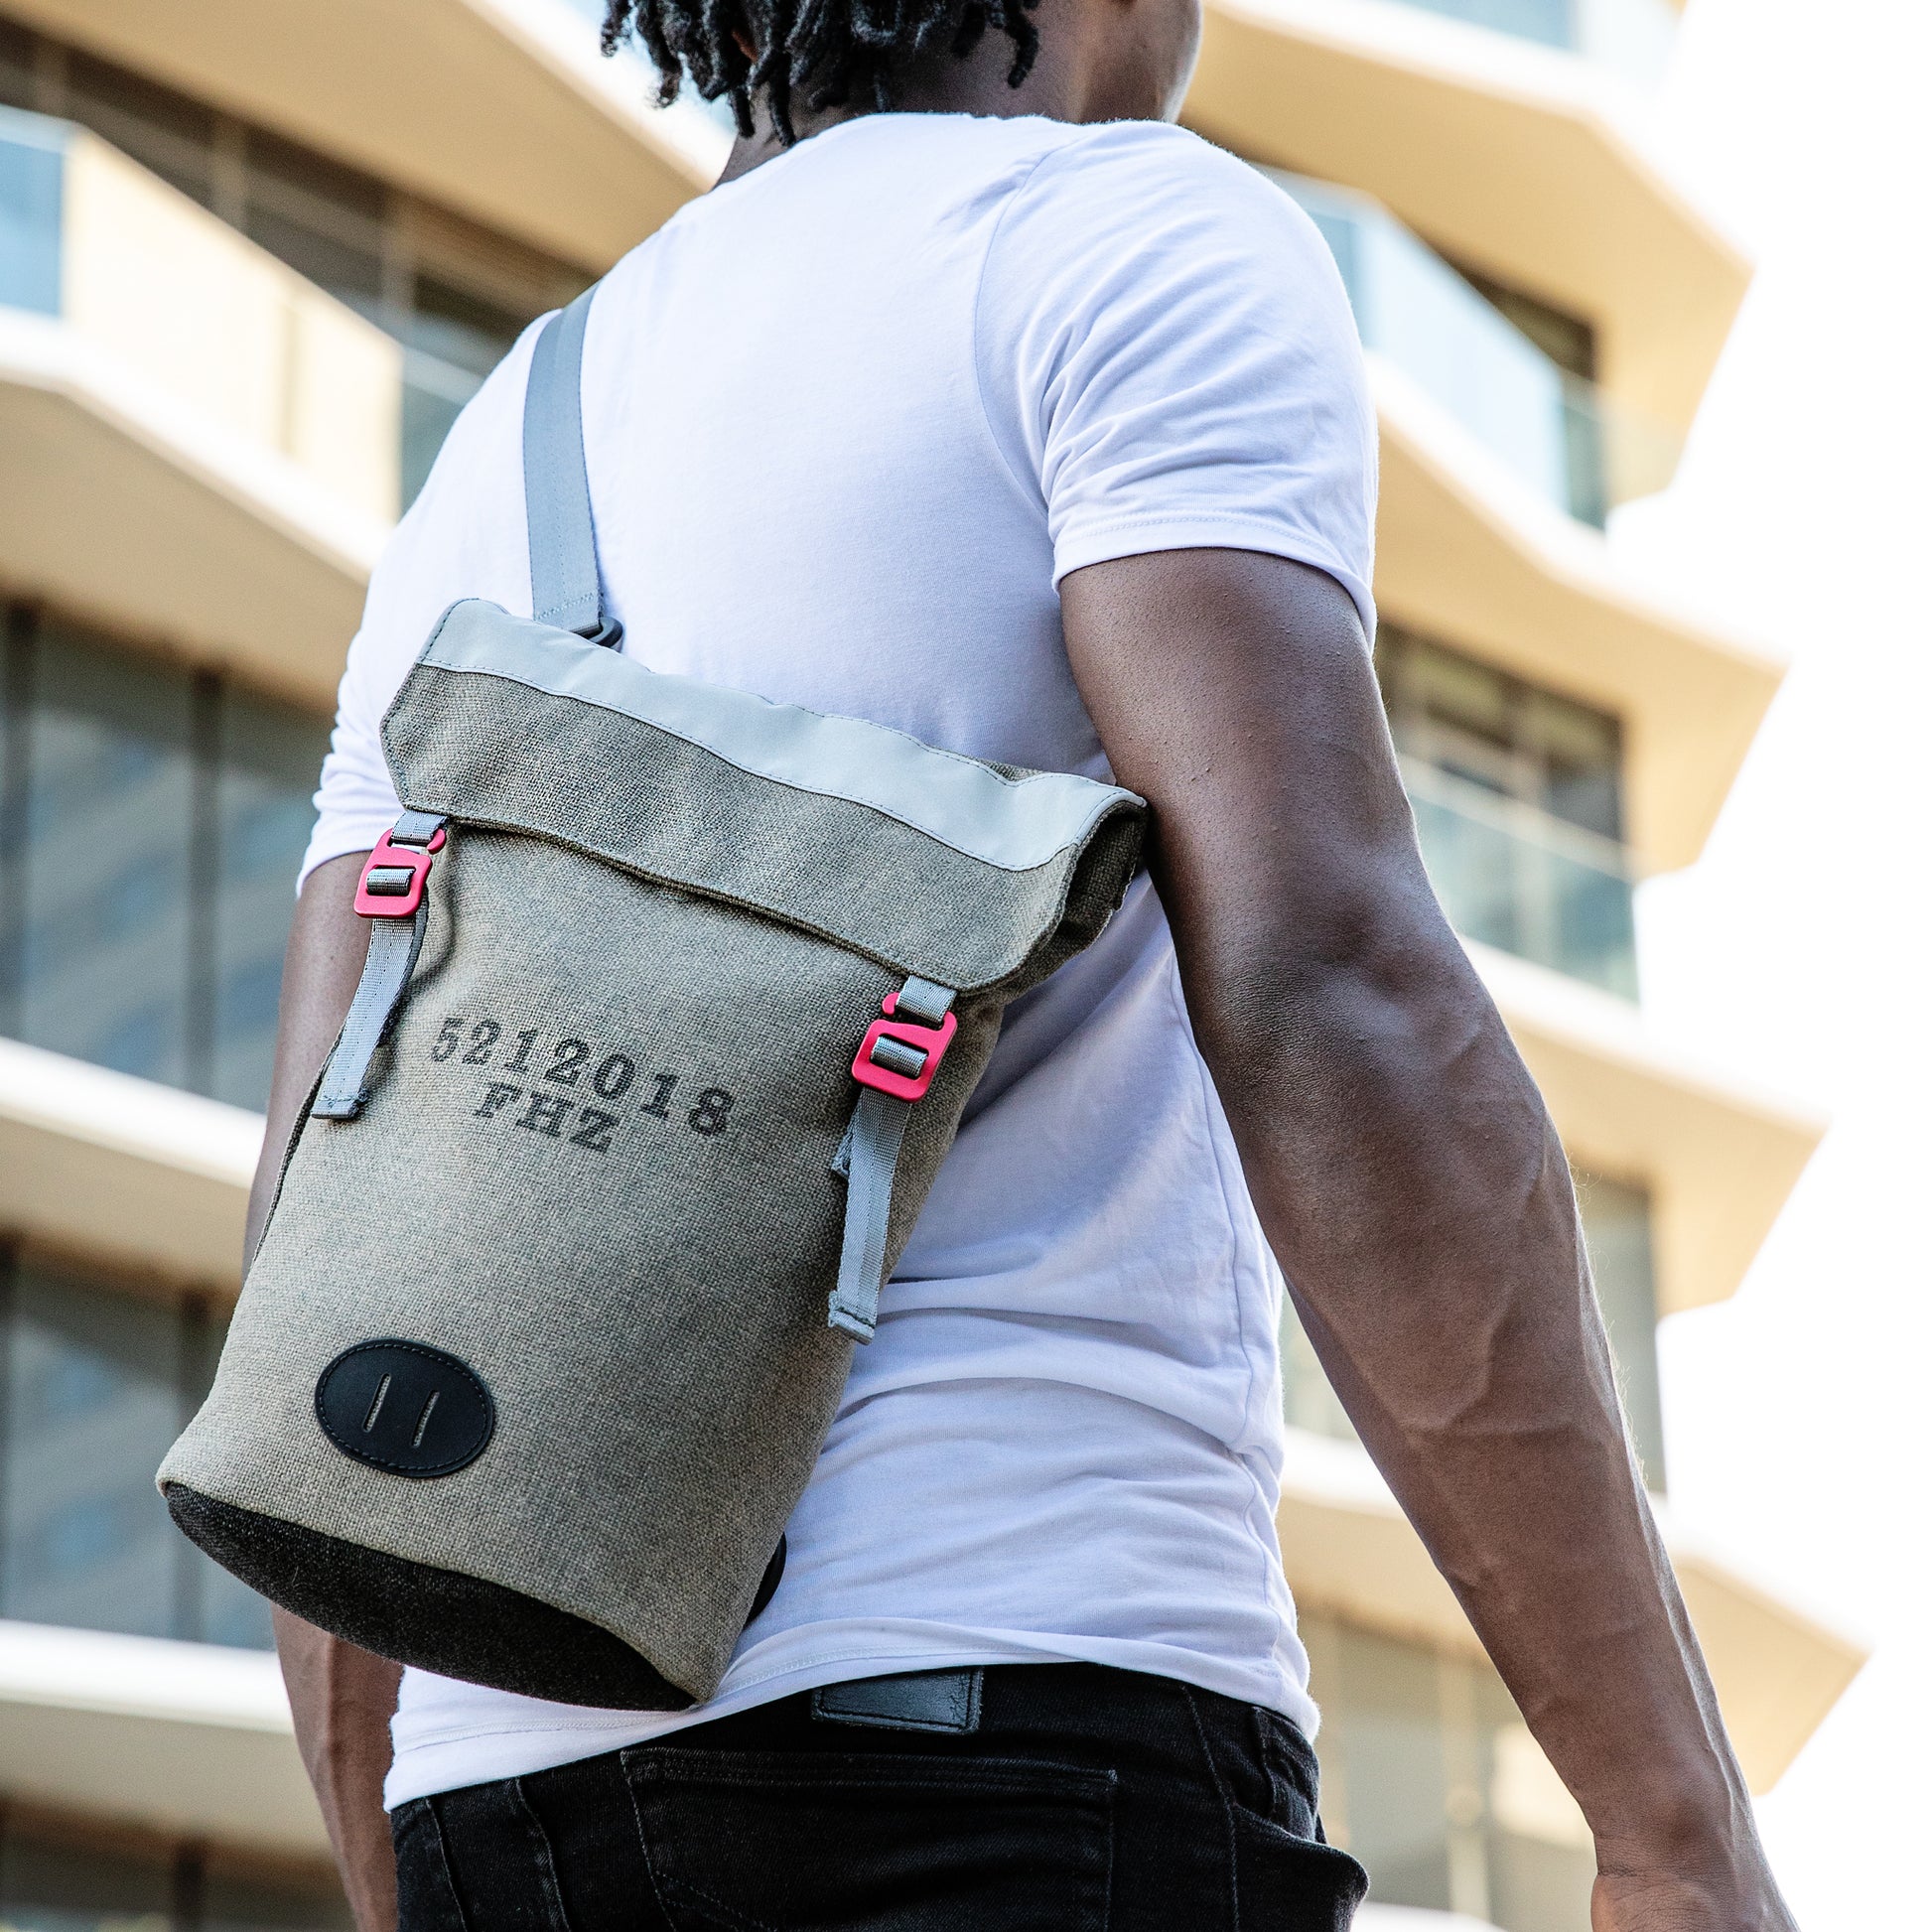 Nylon Convertible Backpack in BEIGE OR KHAKI